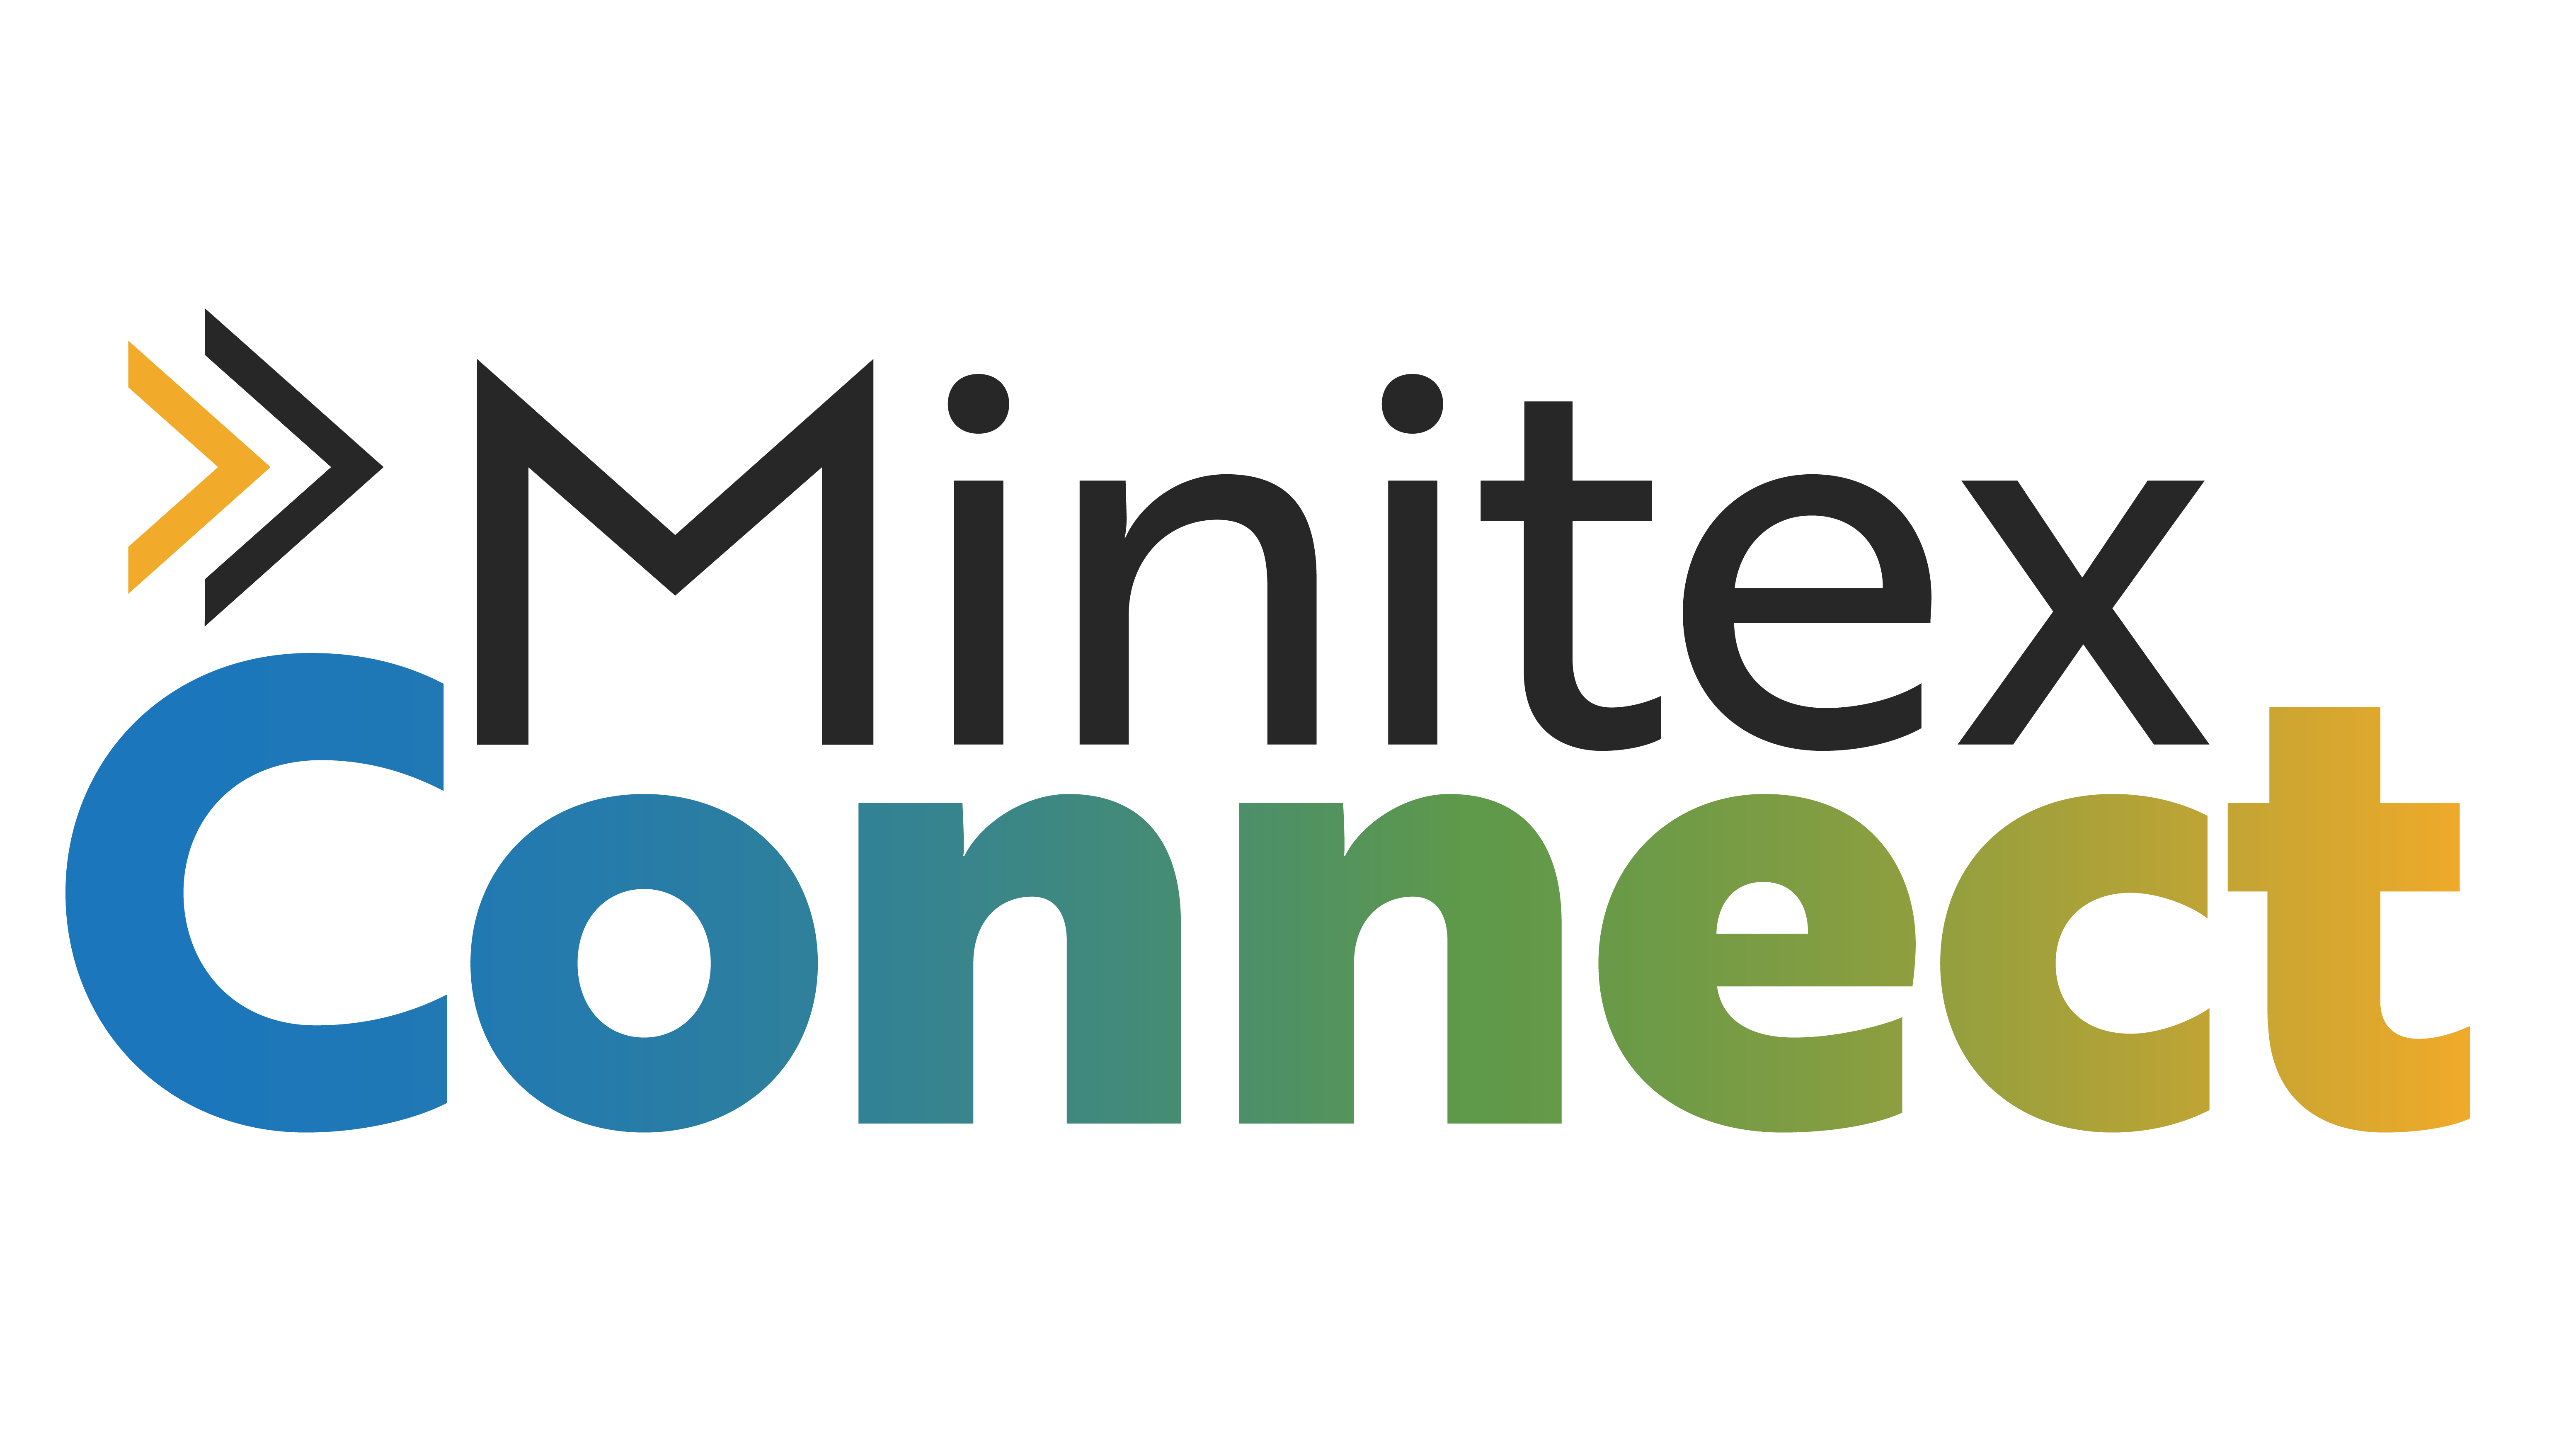 The Minitex Connect logo.